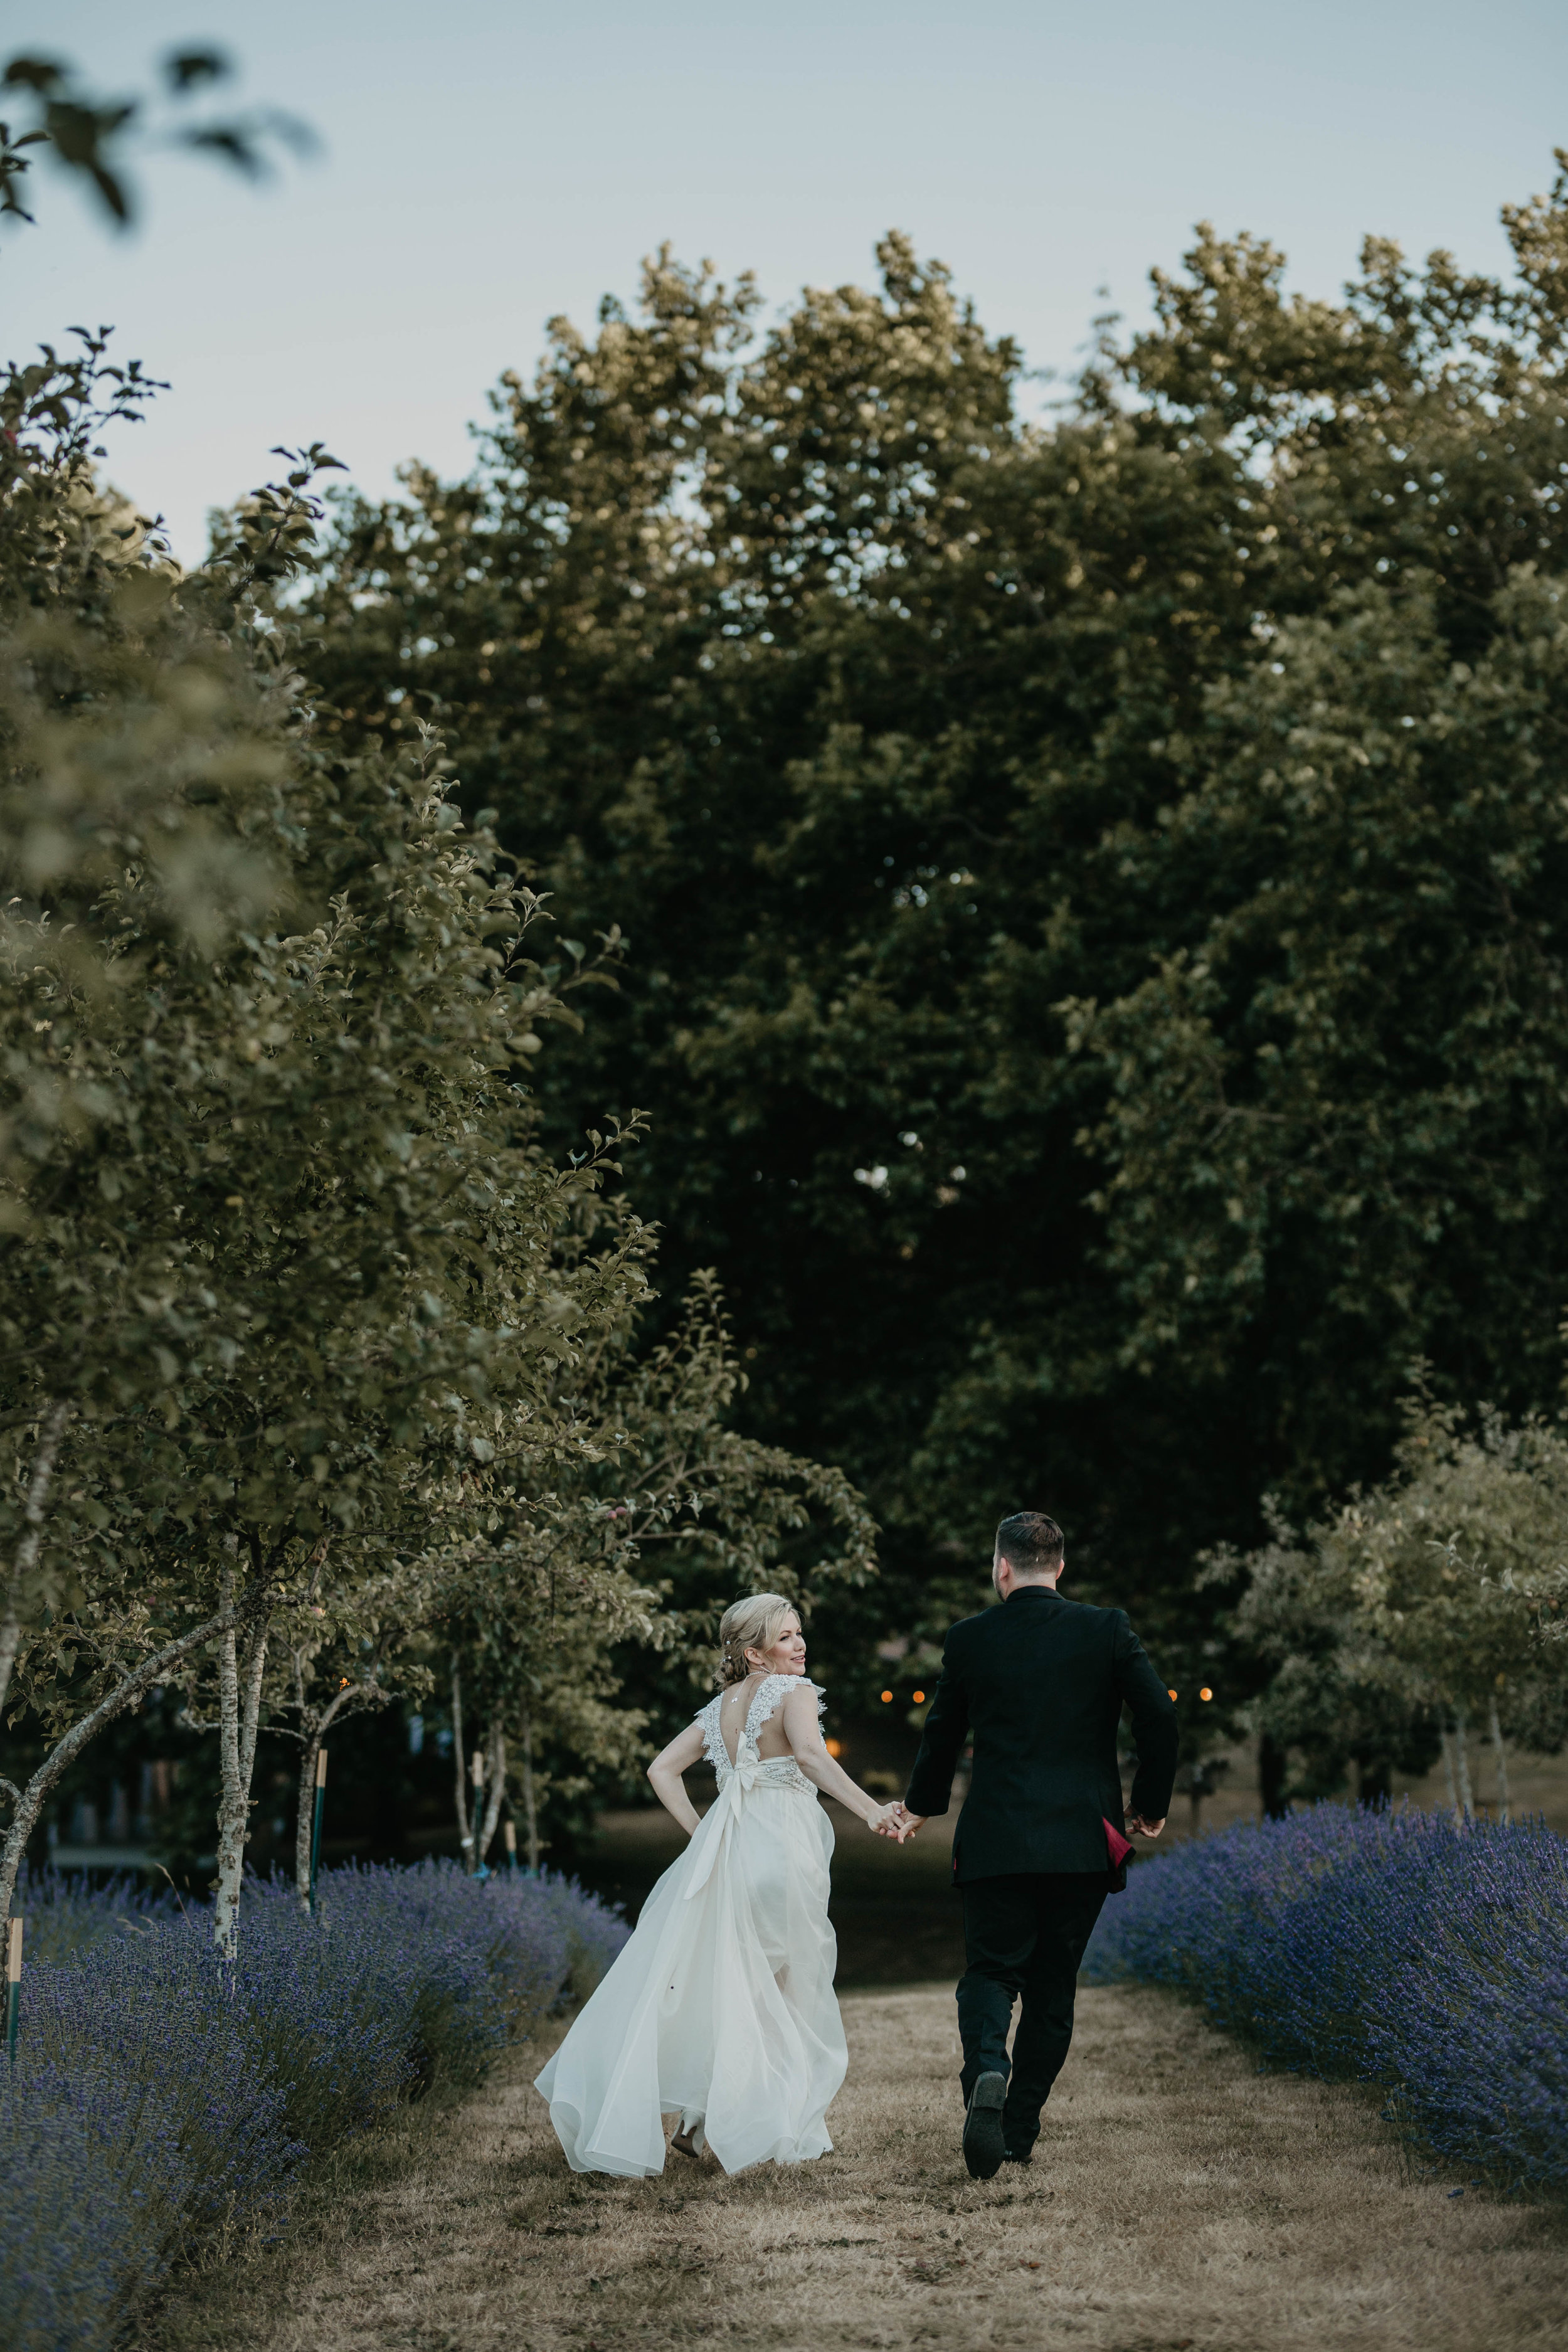 nicole-daacke-photography-kingston-house-bainbride-washington-wedding-photography-summer-wedding-lavendar-field-pacific-northwest-wedding-glam-forest-elopement-photographer-76.jpg